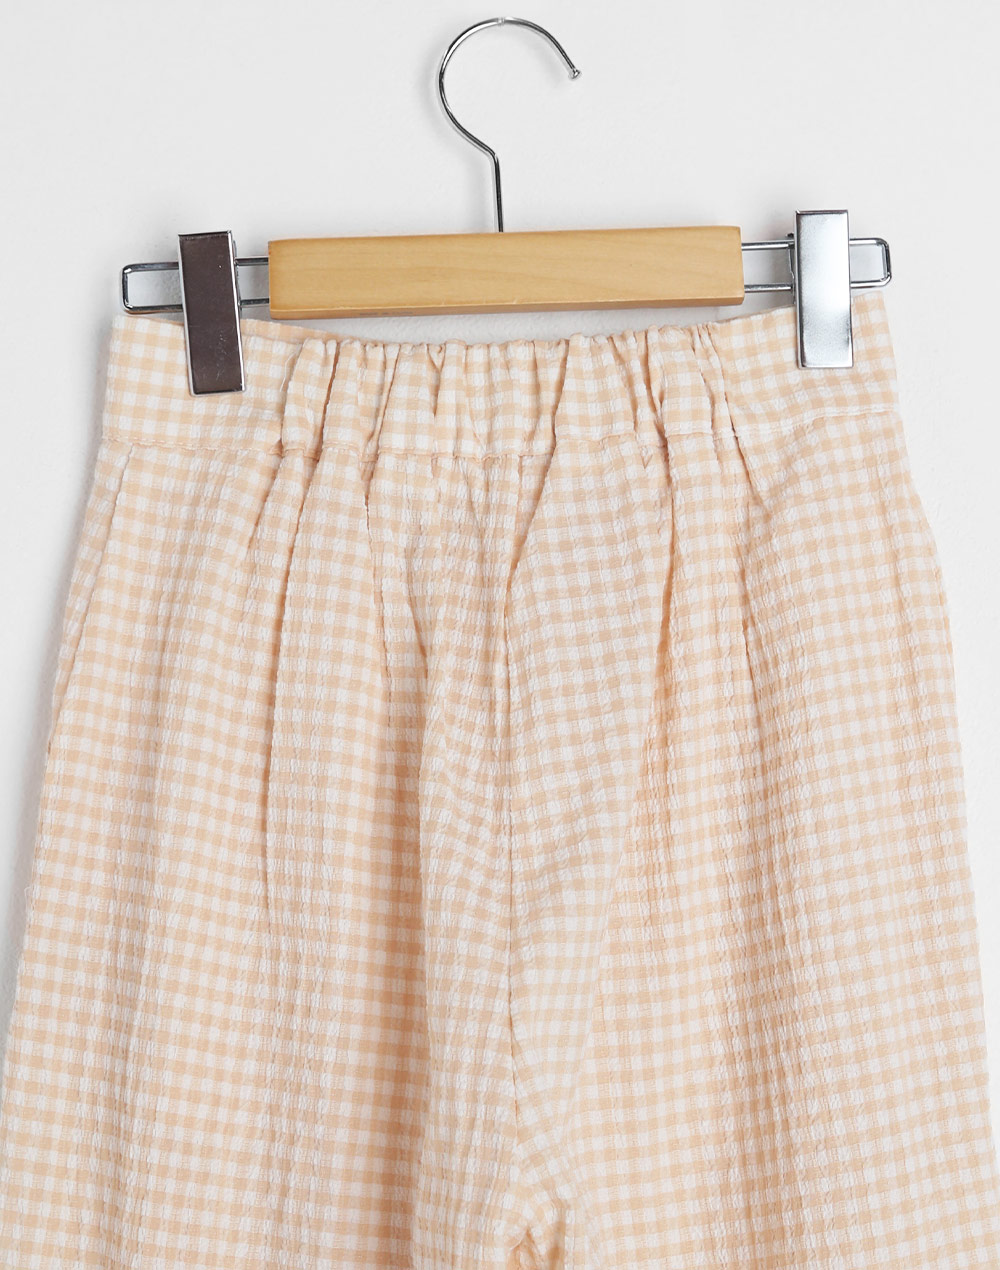 gingham ribbon wide pants・t281785（パンツ/パンツ）| 1016_kanako | 東京ガールズマーケット